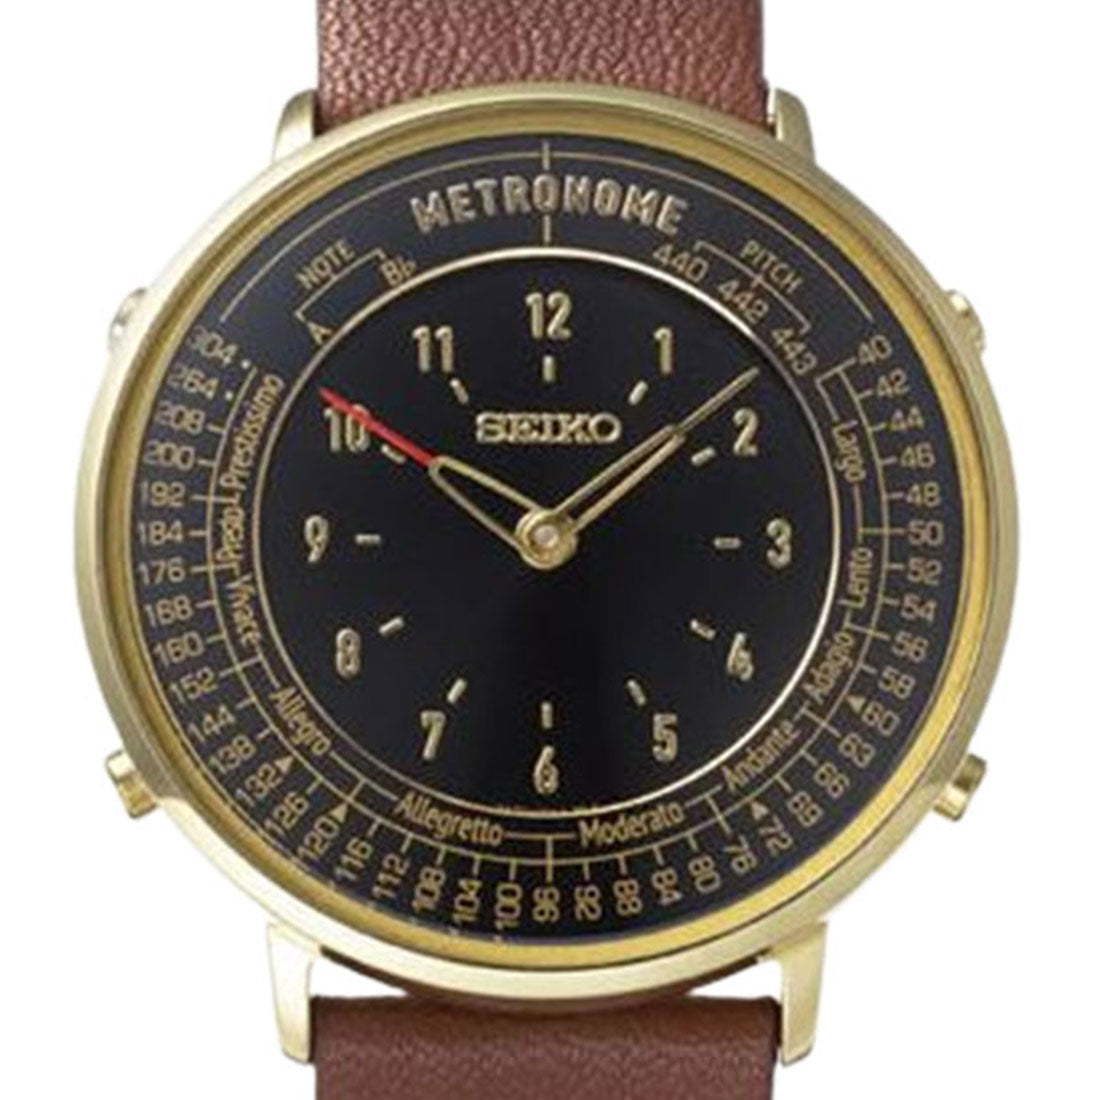 Seiko SMW001A Metronome Black Dial Analog Quartz Watch 